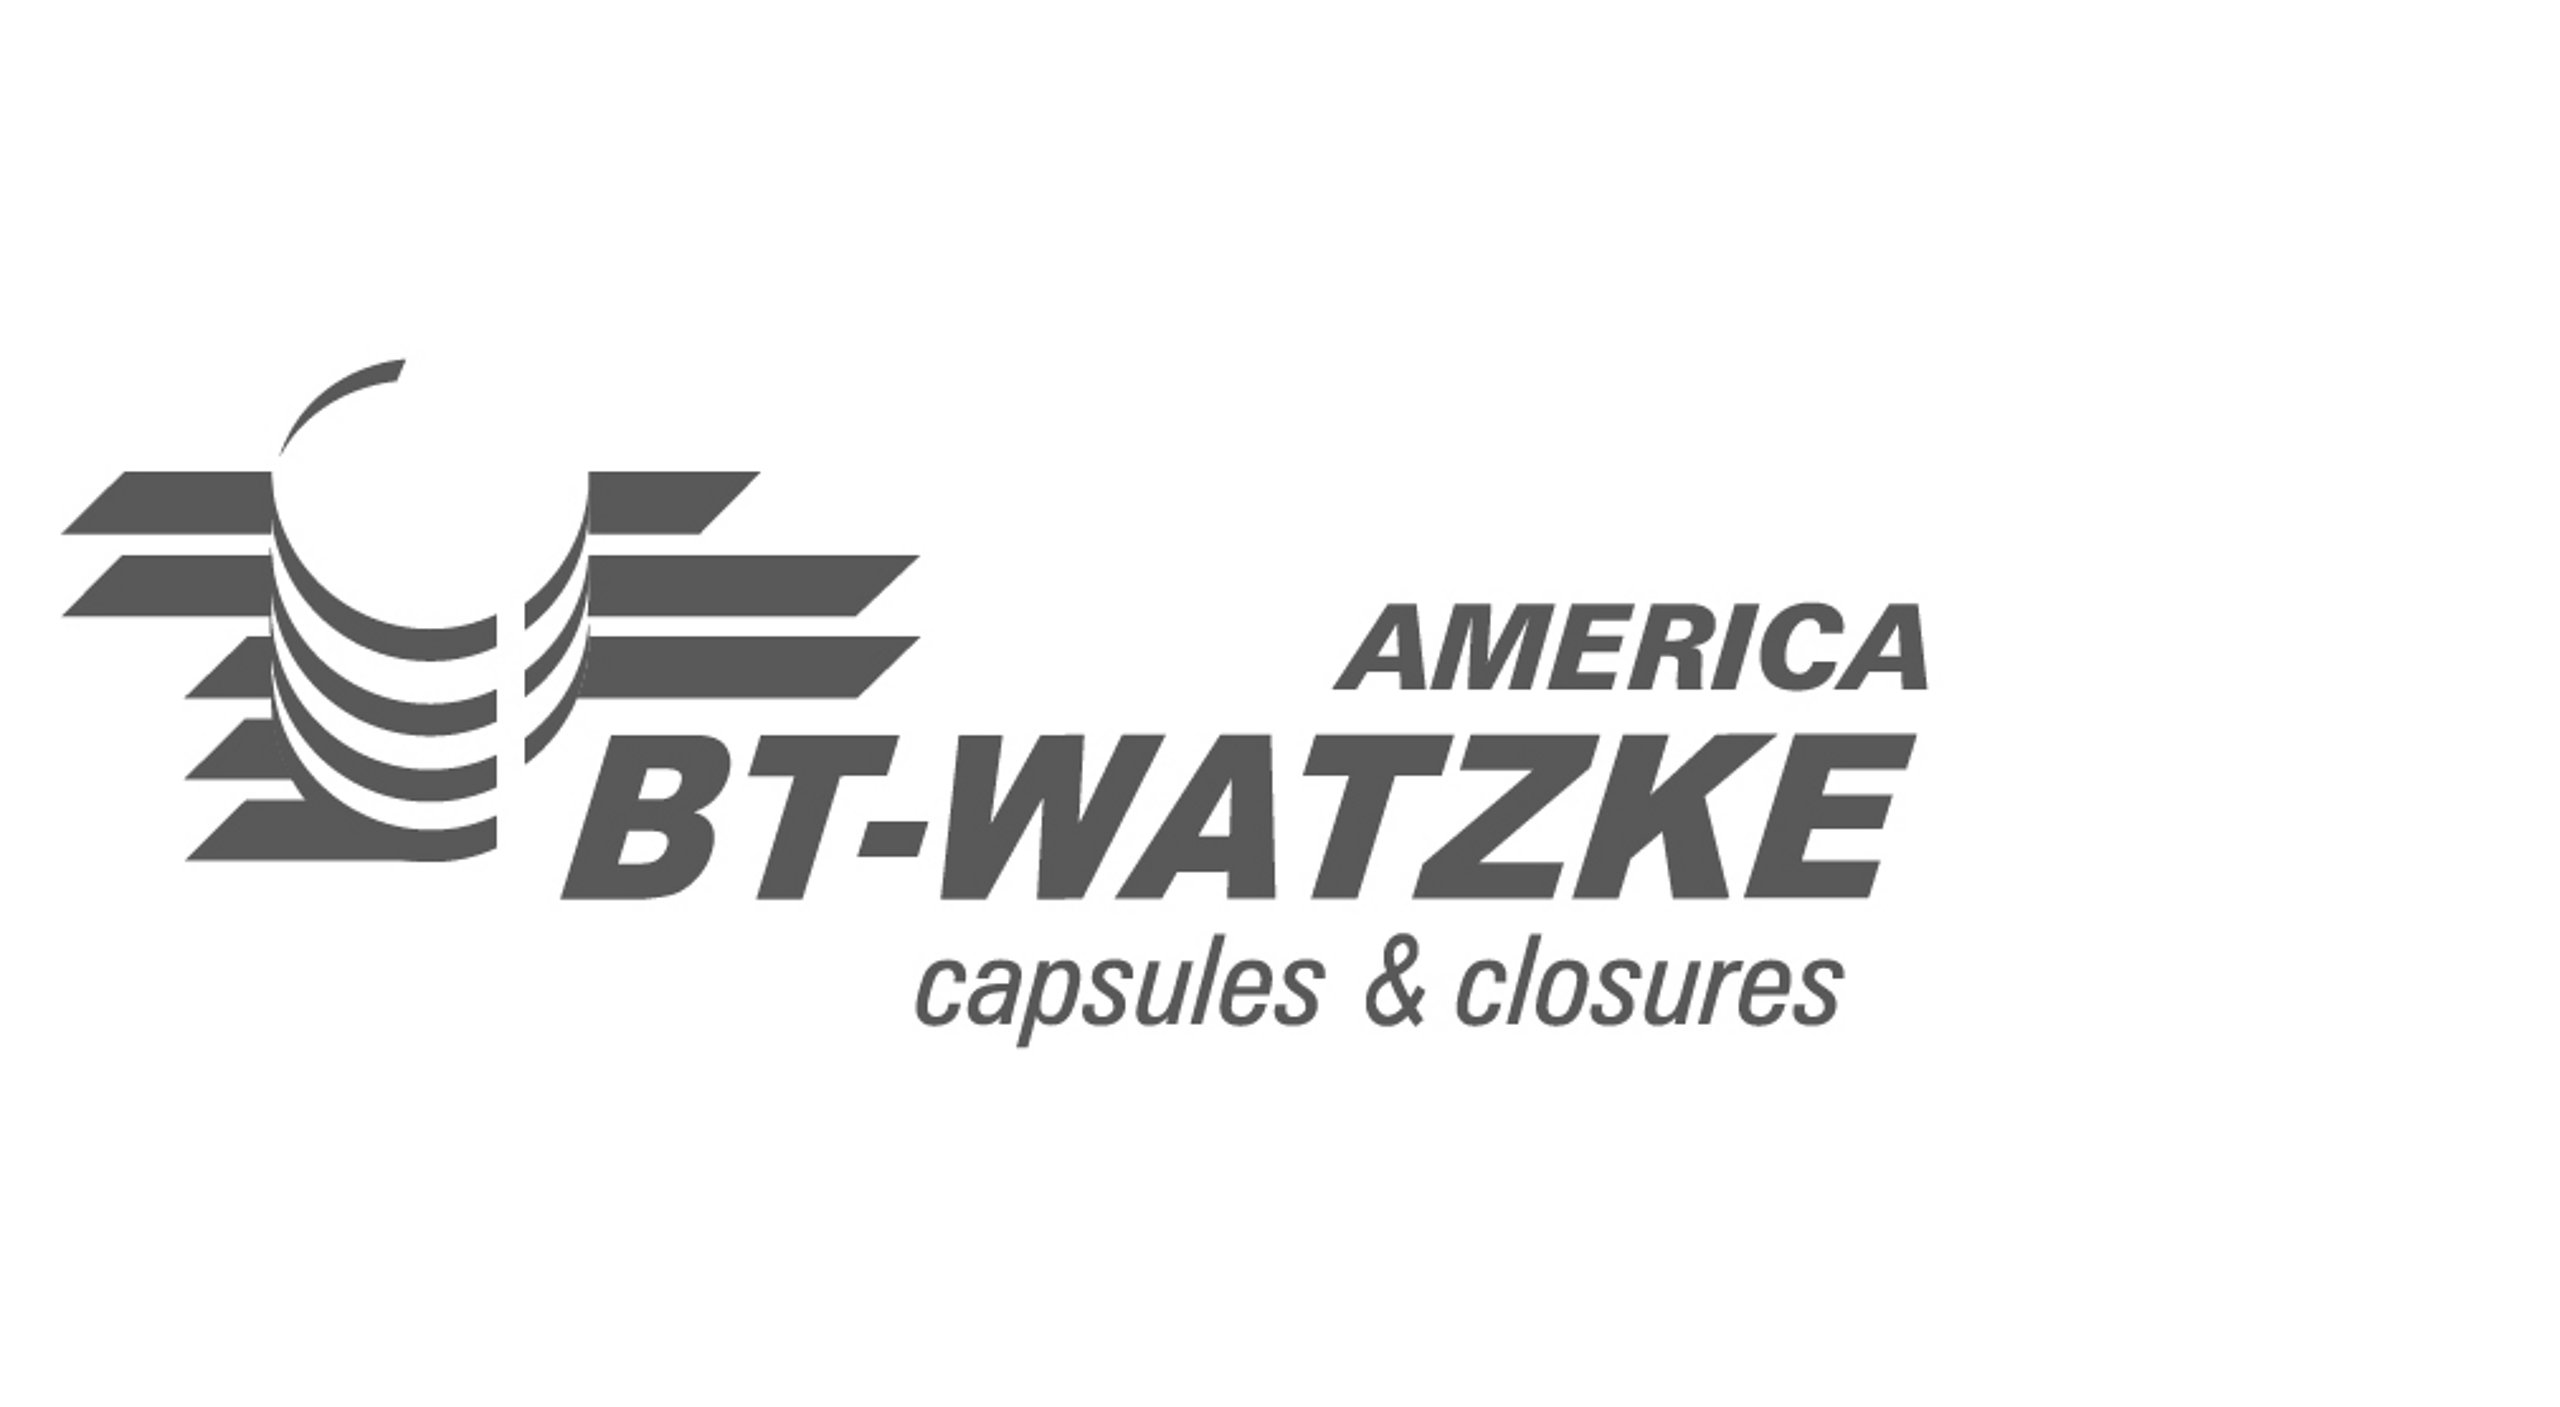 BT-Watzke America Logo